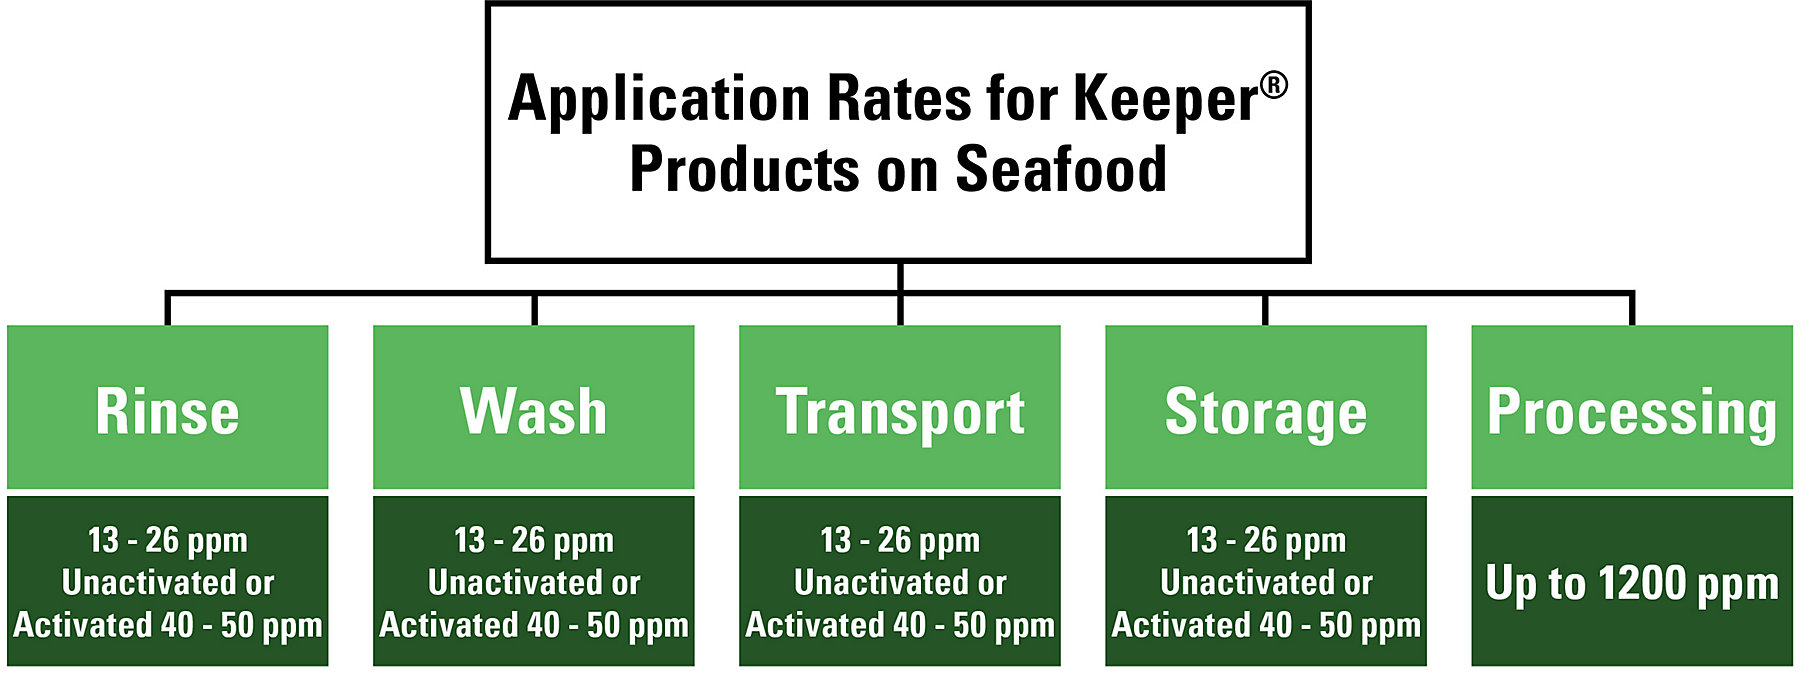 Keeper Seafood Application Chart